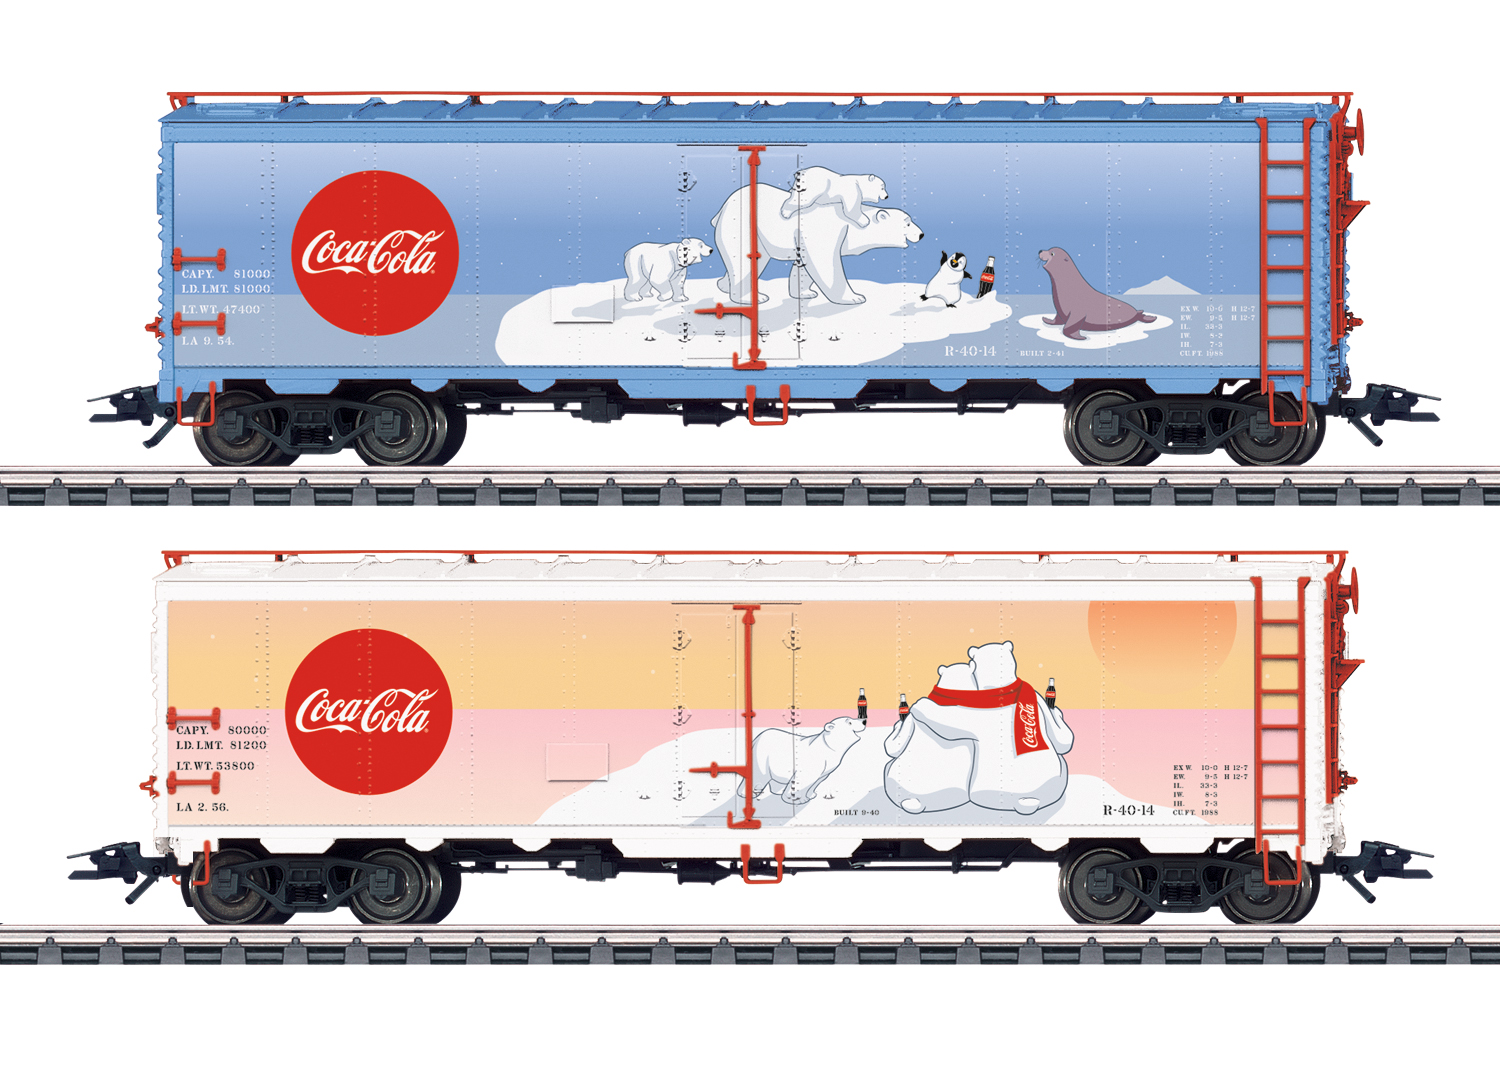 Marklin – Set de dos vagones de Mercancias Coca Cola, Escala H0, Ref: 45687.